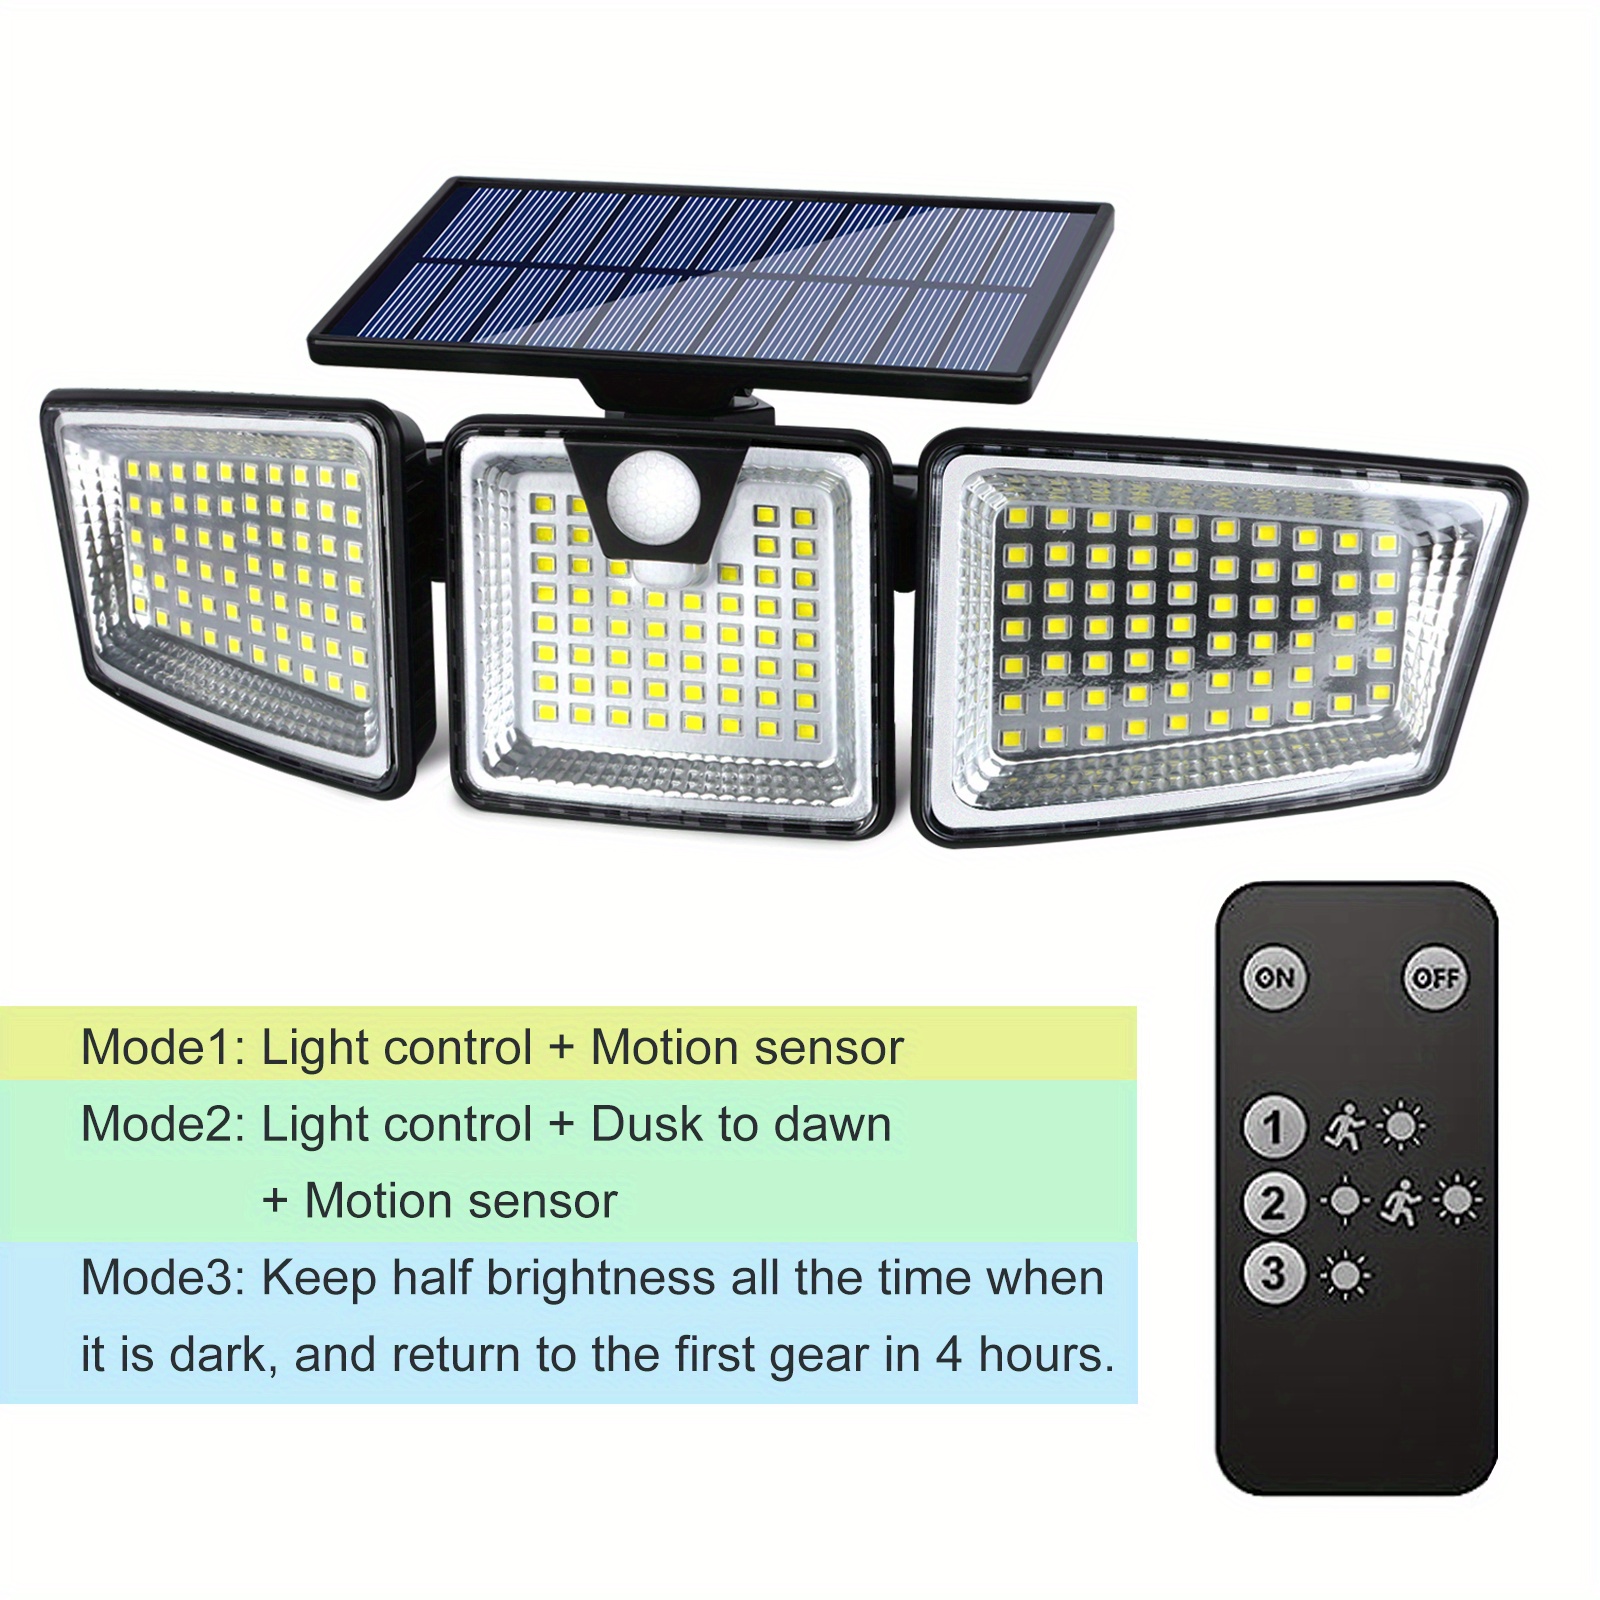 180 Motion sensing light control